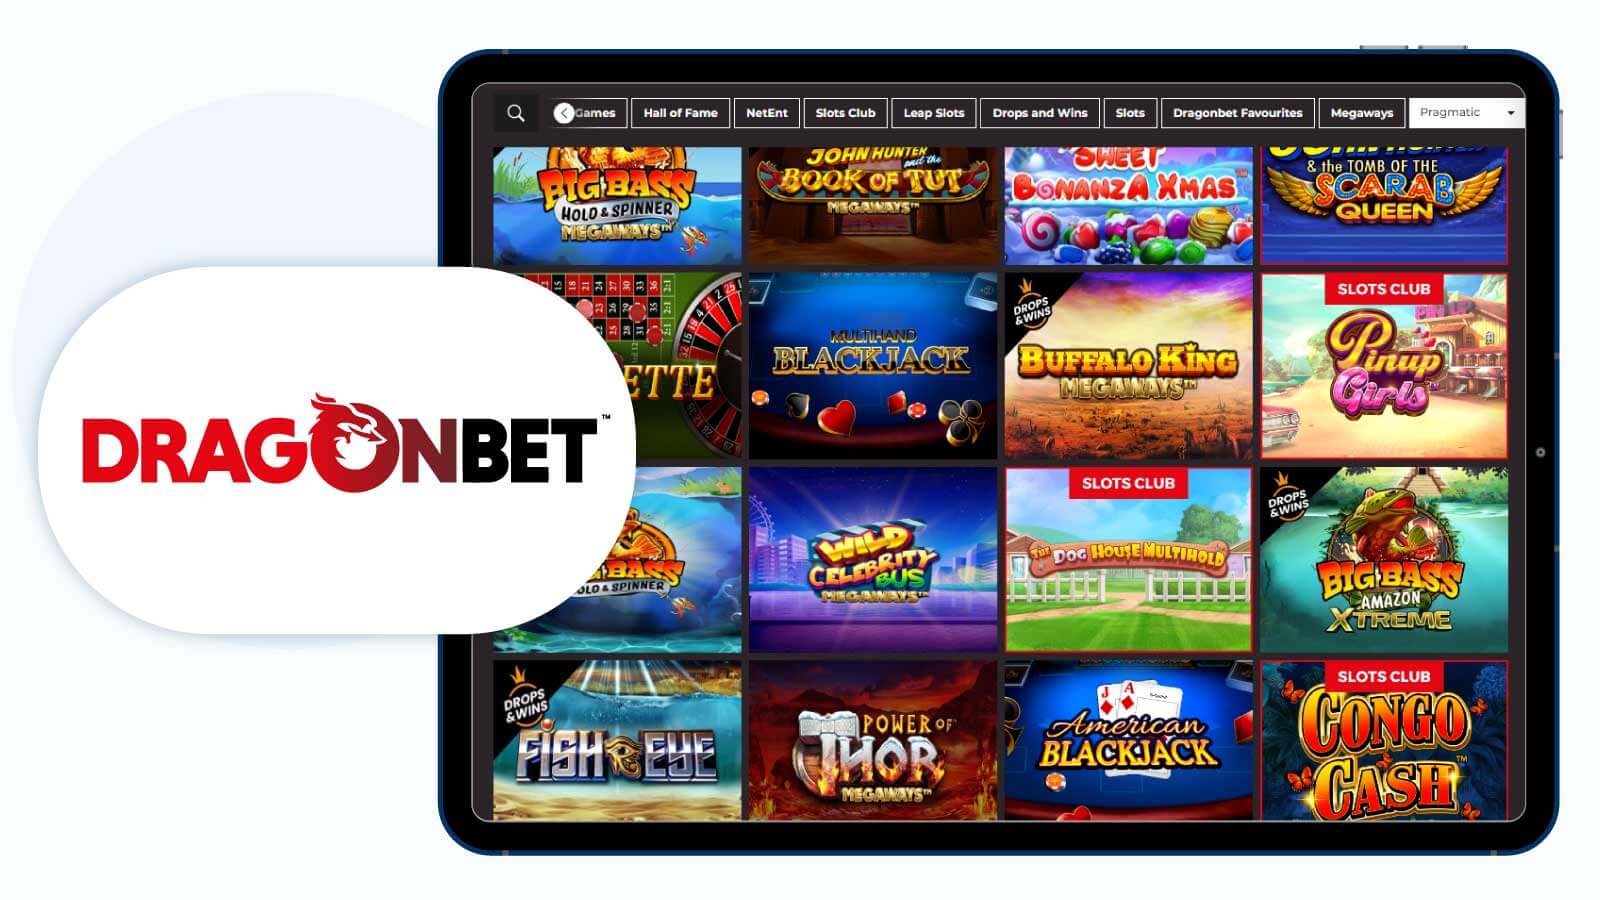 Dragonbet – Best £2 Deposit Casino UK with No Wagering Bonuses